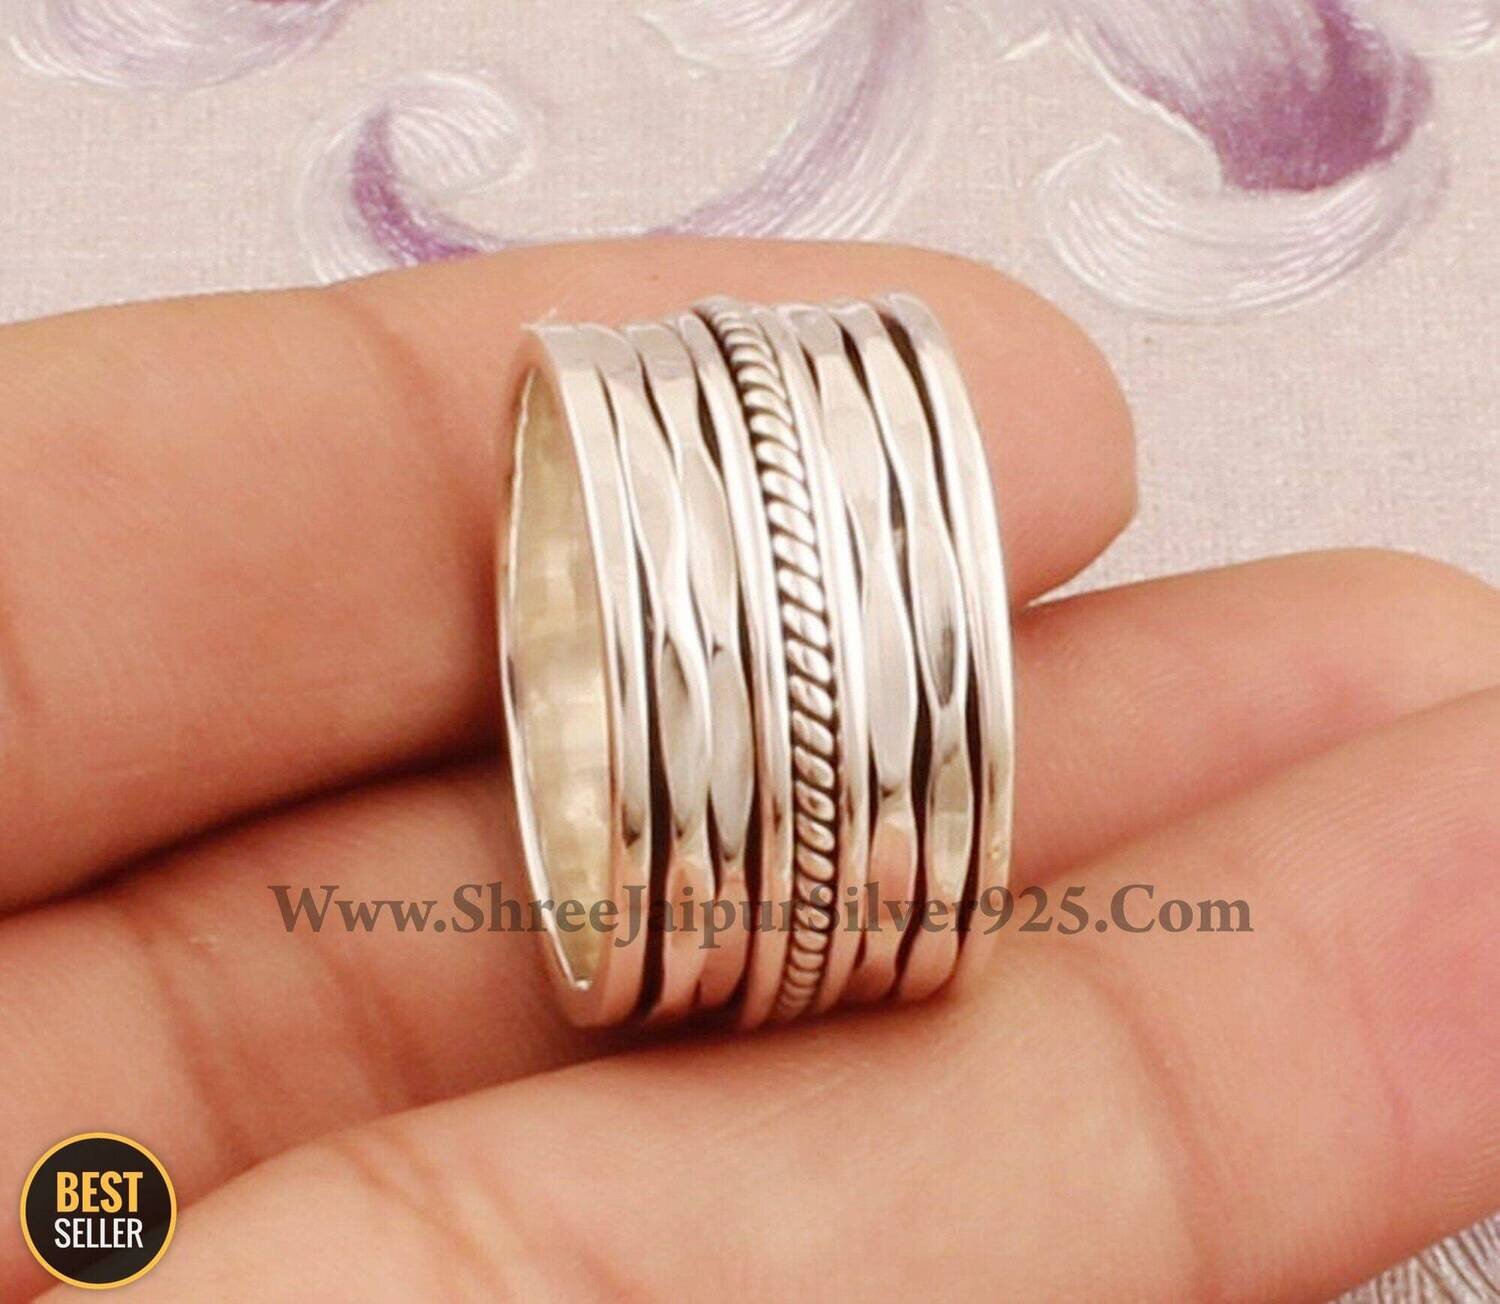 Designer Spinner Ring, 925 Sterling Silver Spinner Ring, Handcrafted Thumb Silver Ring, Boho Ring, Christmas Gift, Women's Ring, Gift idea